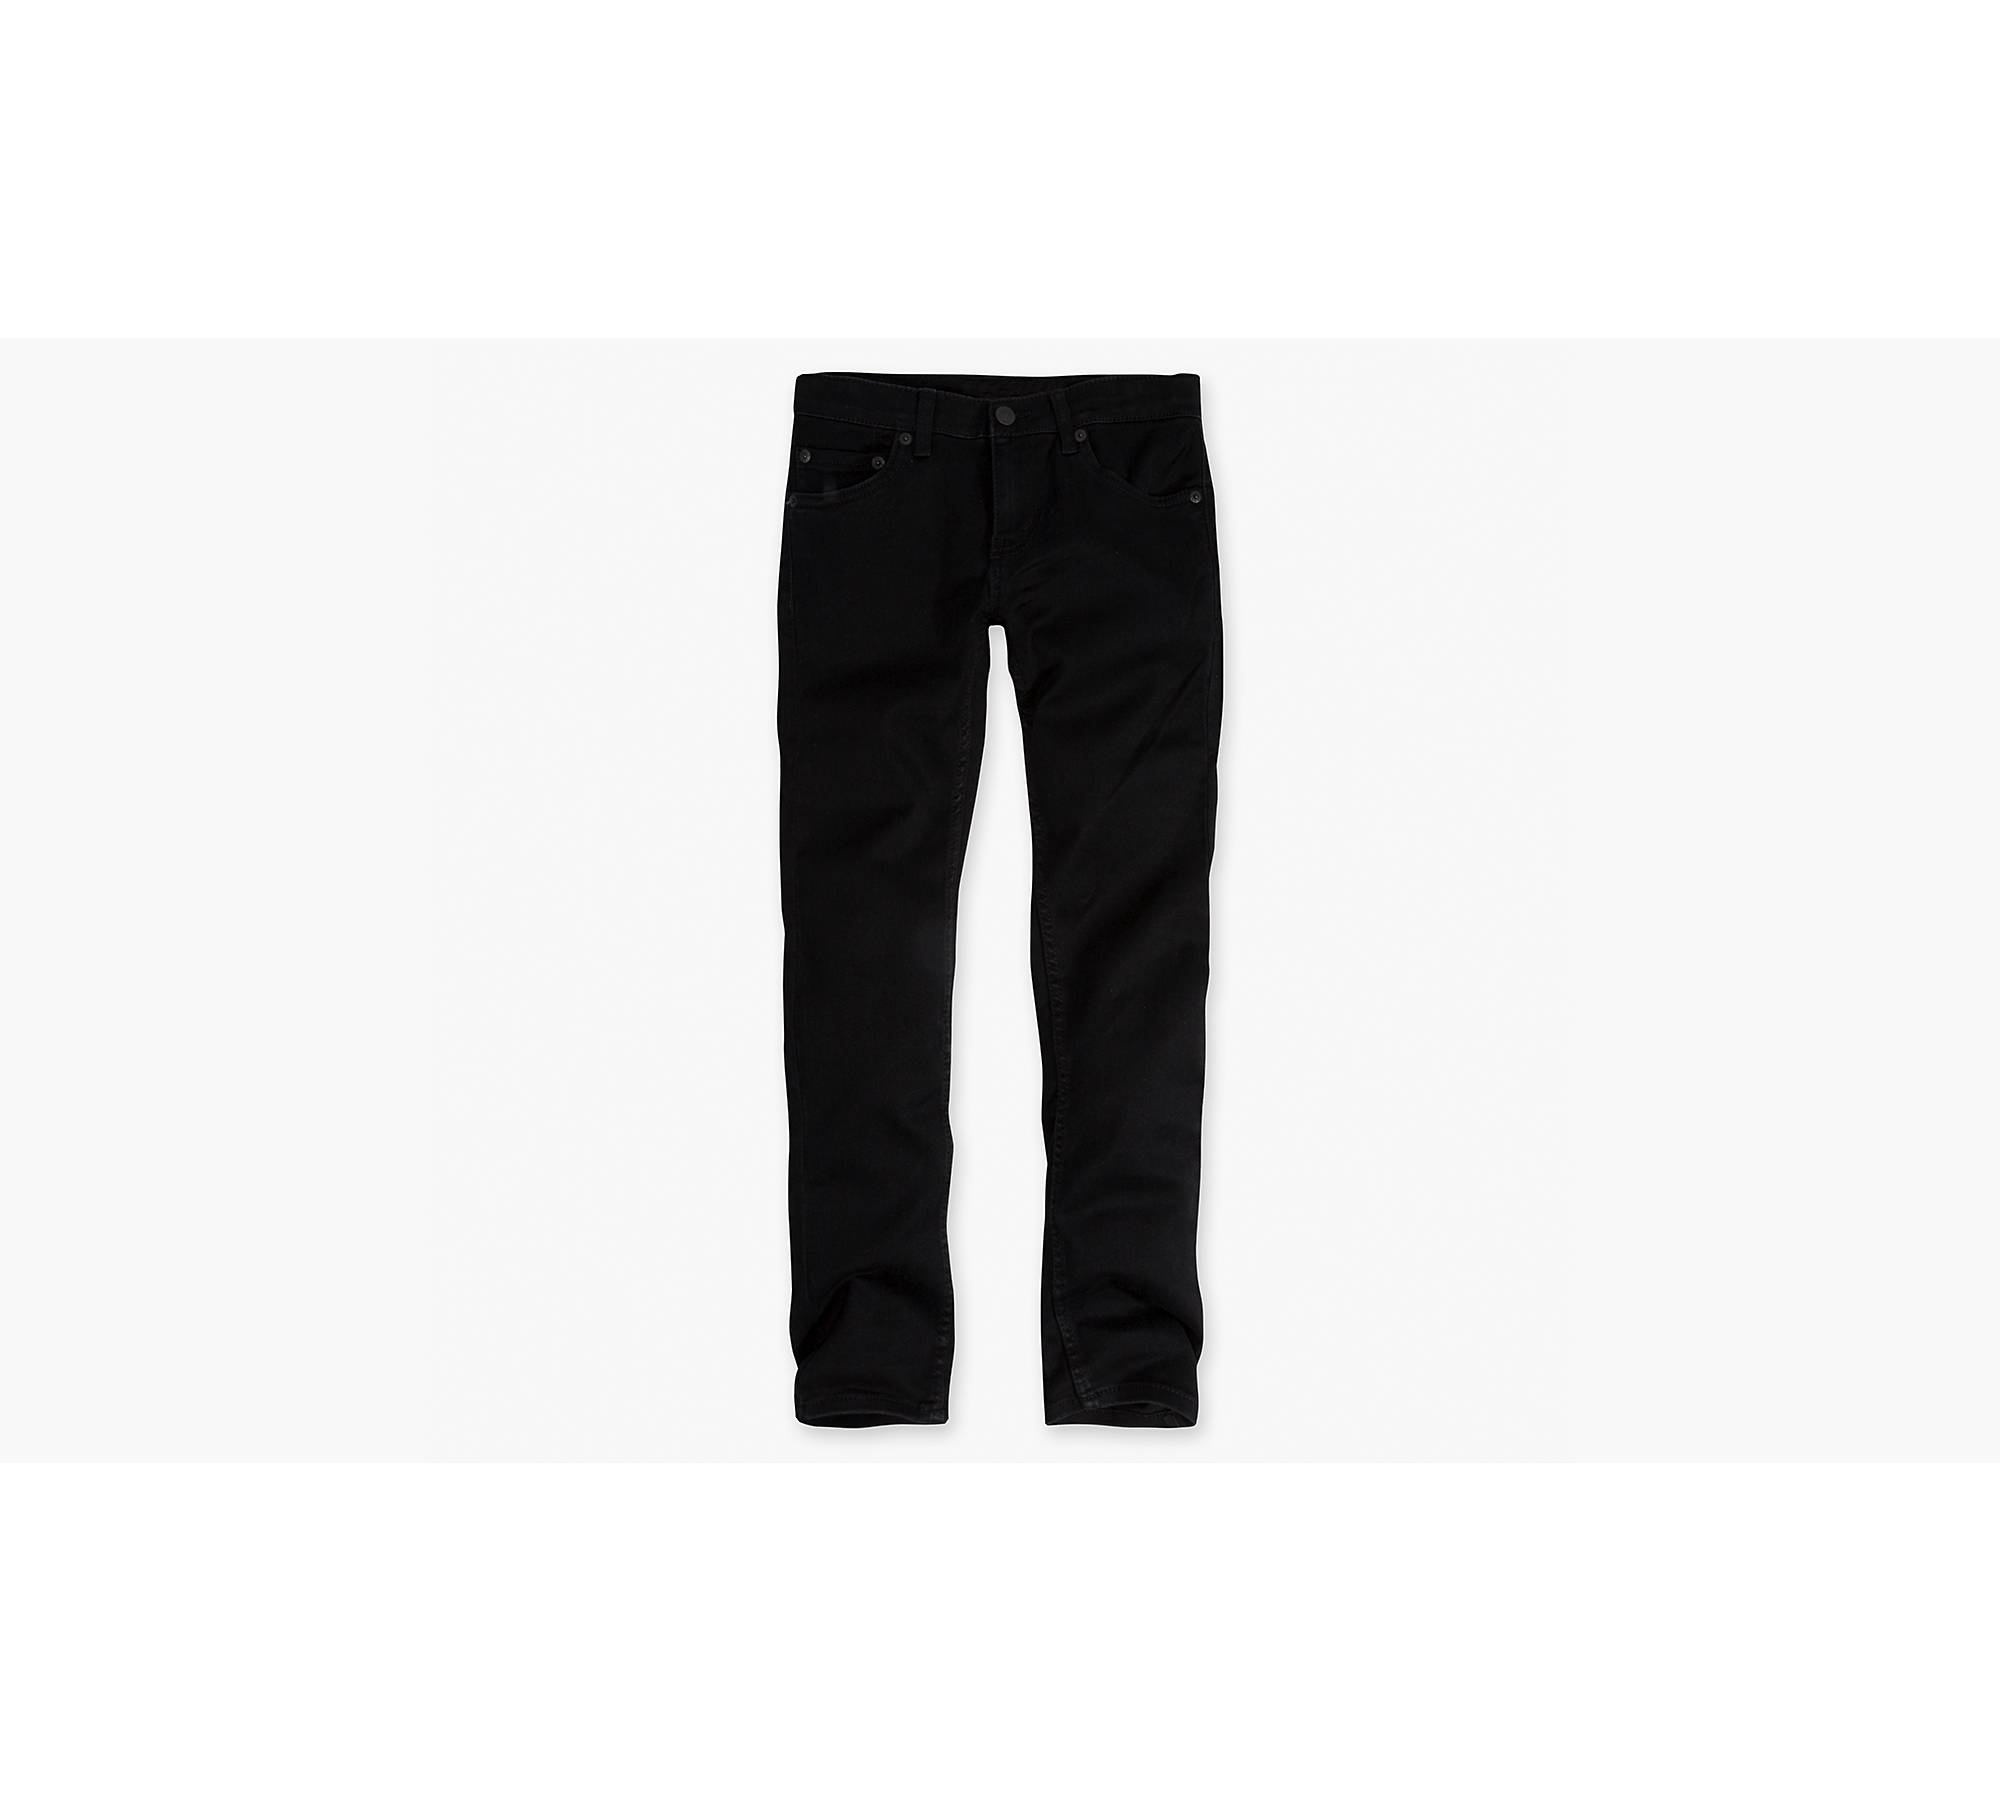 519™ Extreme Skinny Big Boys Jeans 8-20 - Black | Levi's® US